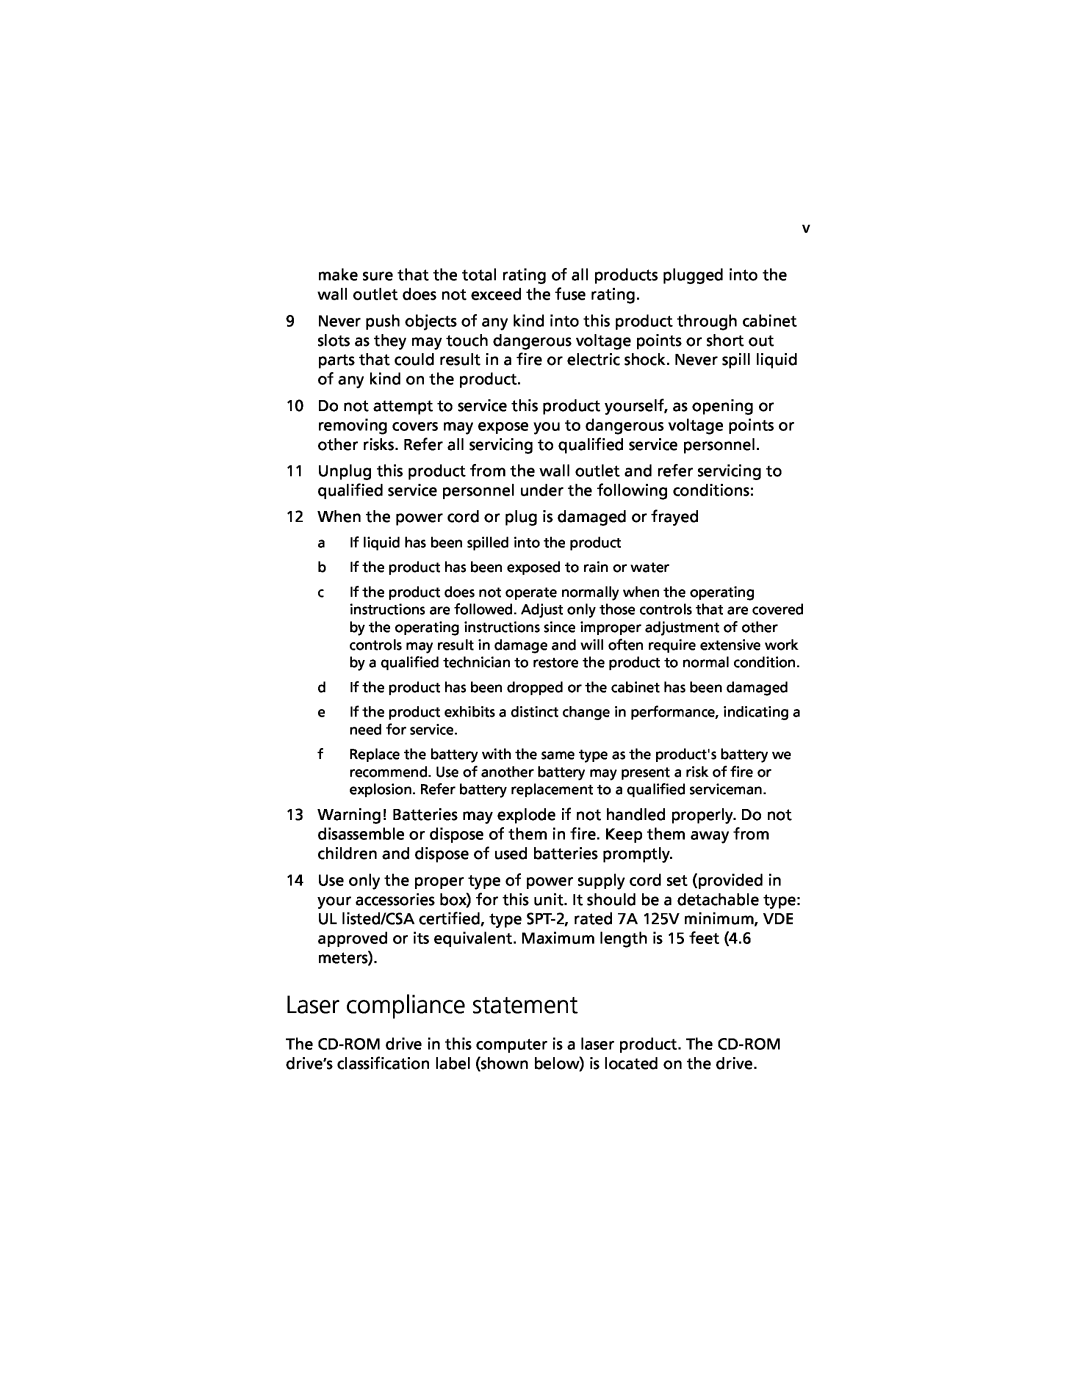 Acer G301 manual Laser compliance statement 